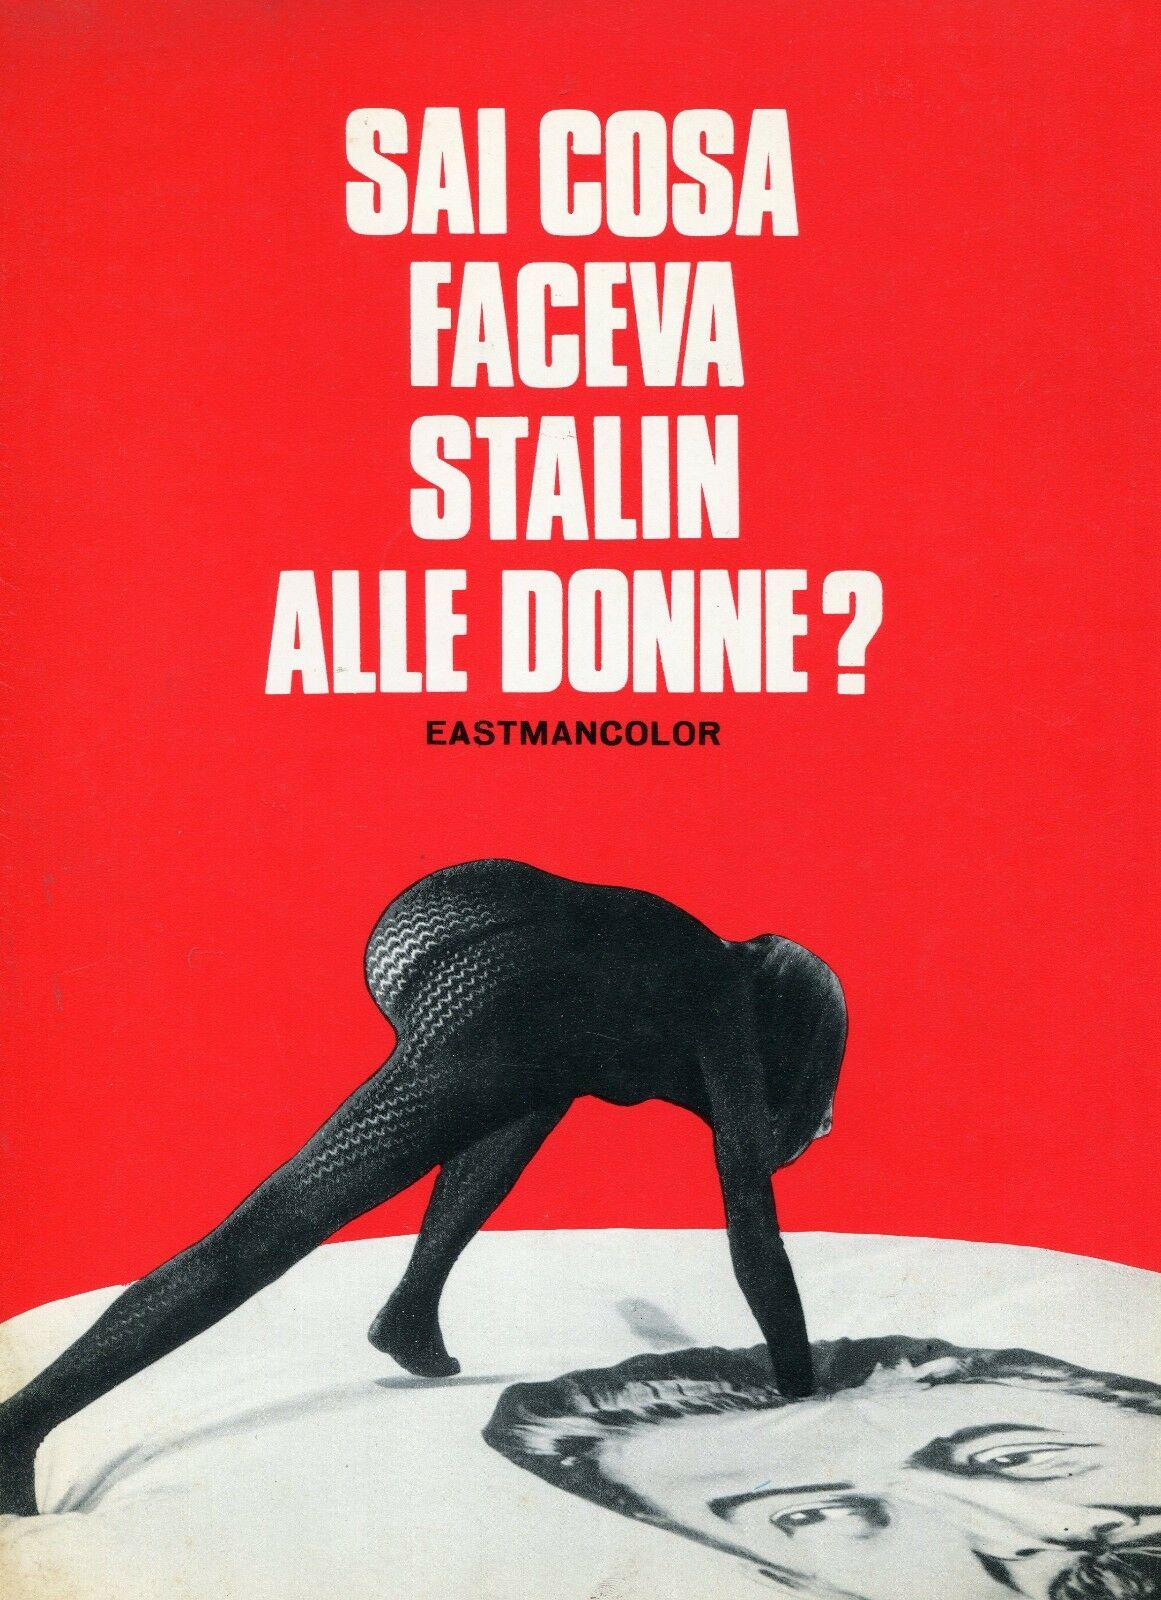 Sai cosa faceva Stalin alle donne? (1969) Screenshot 4